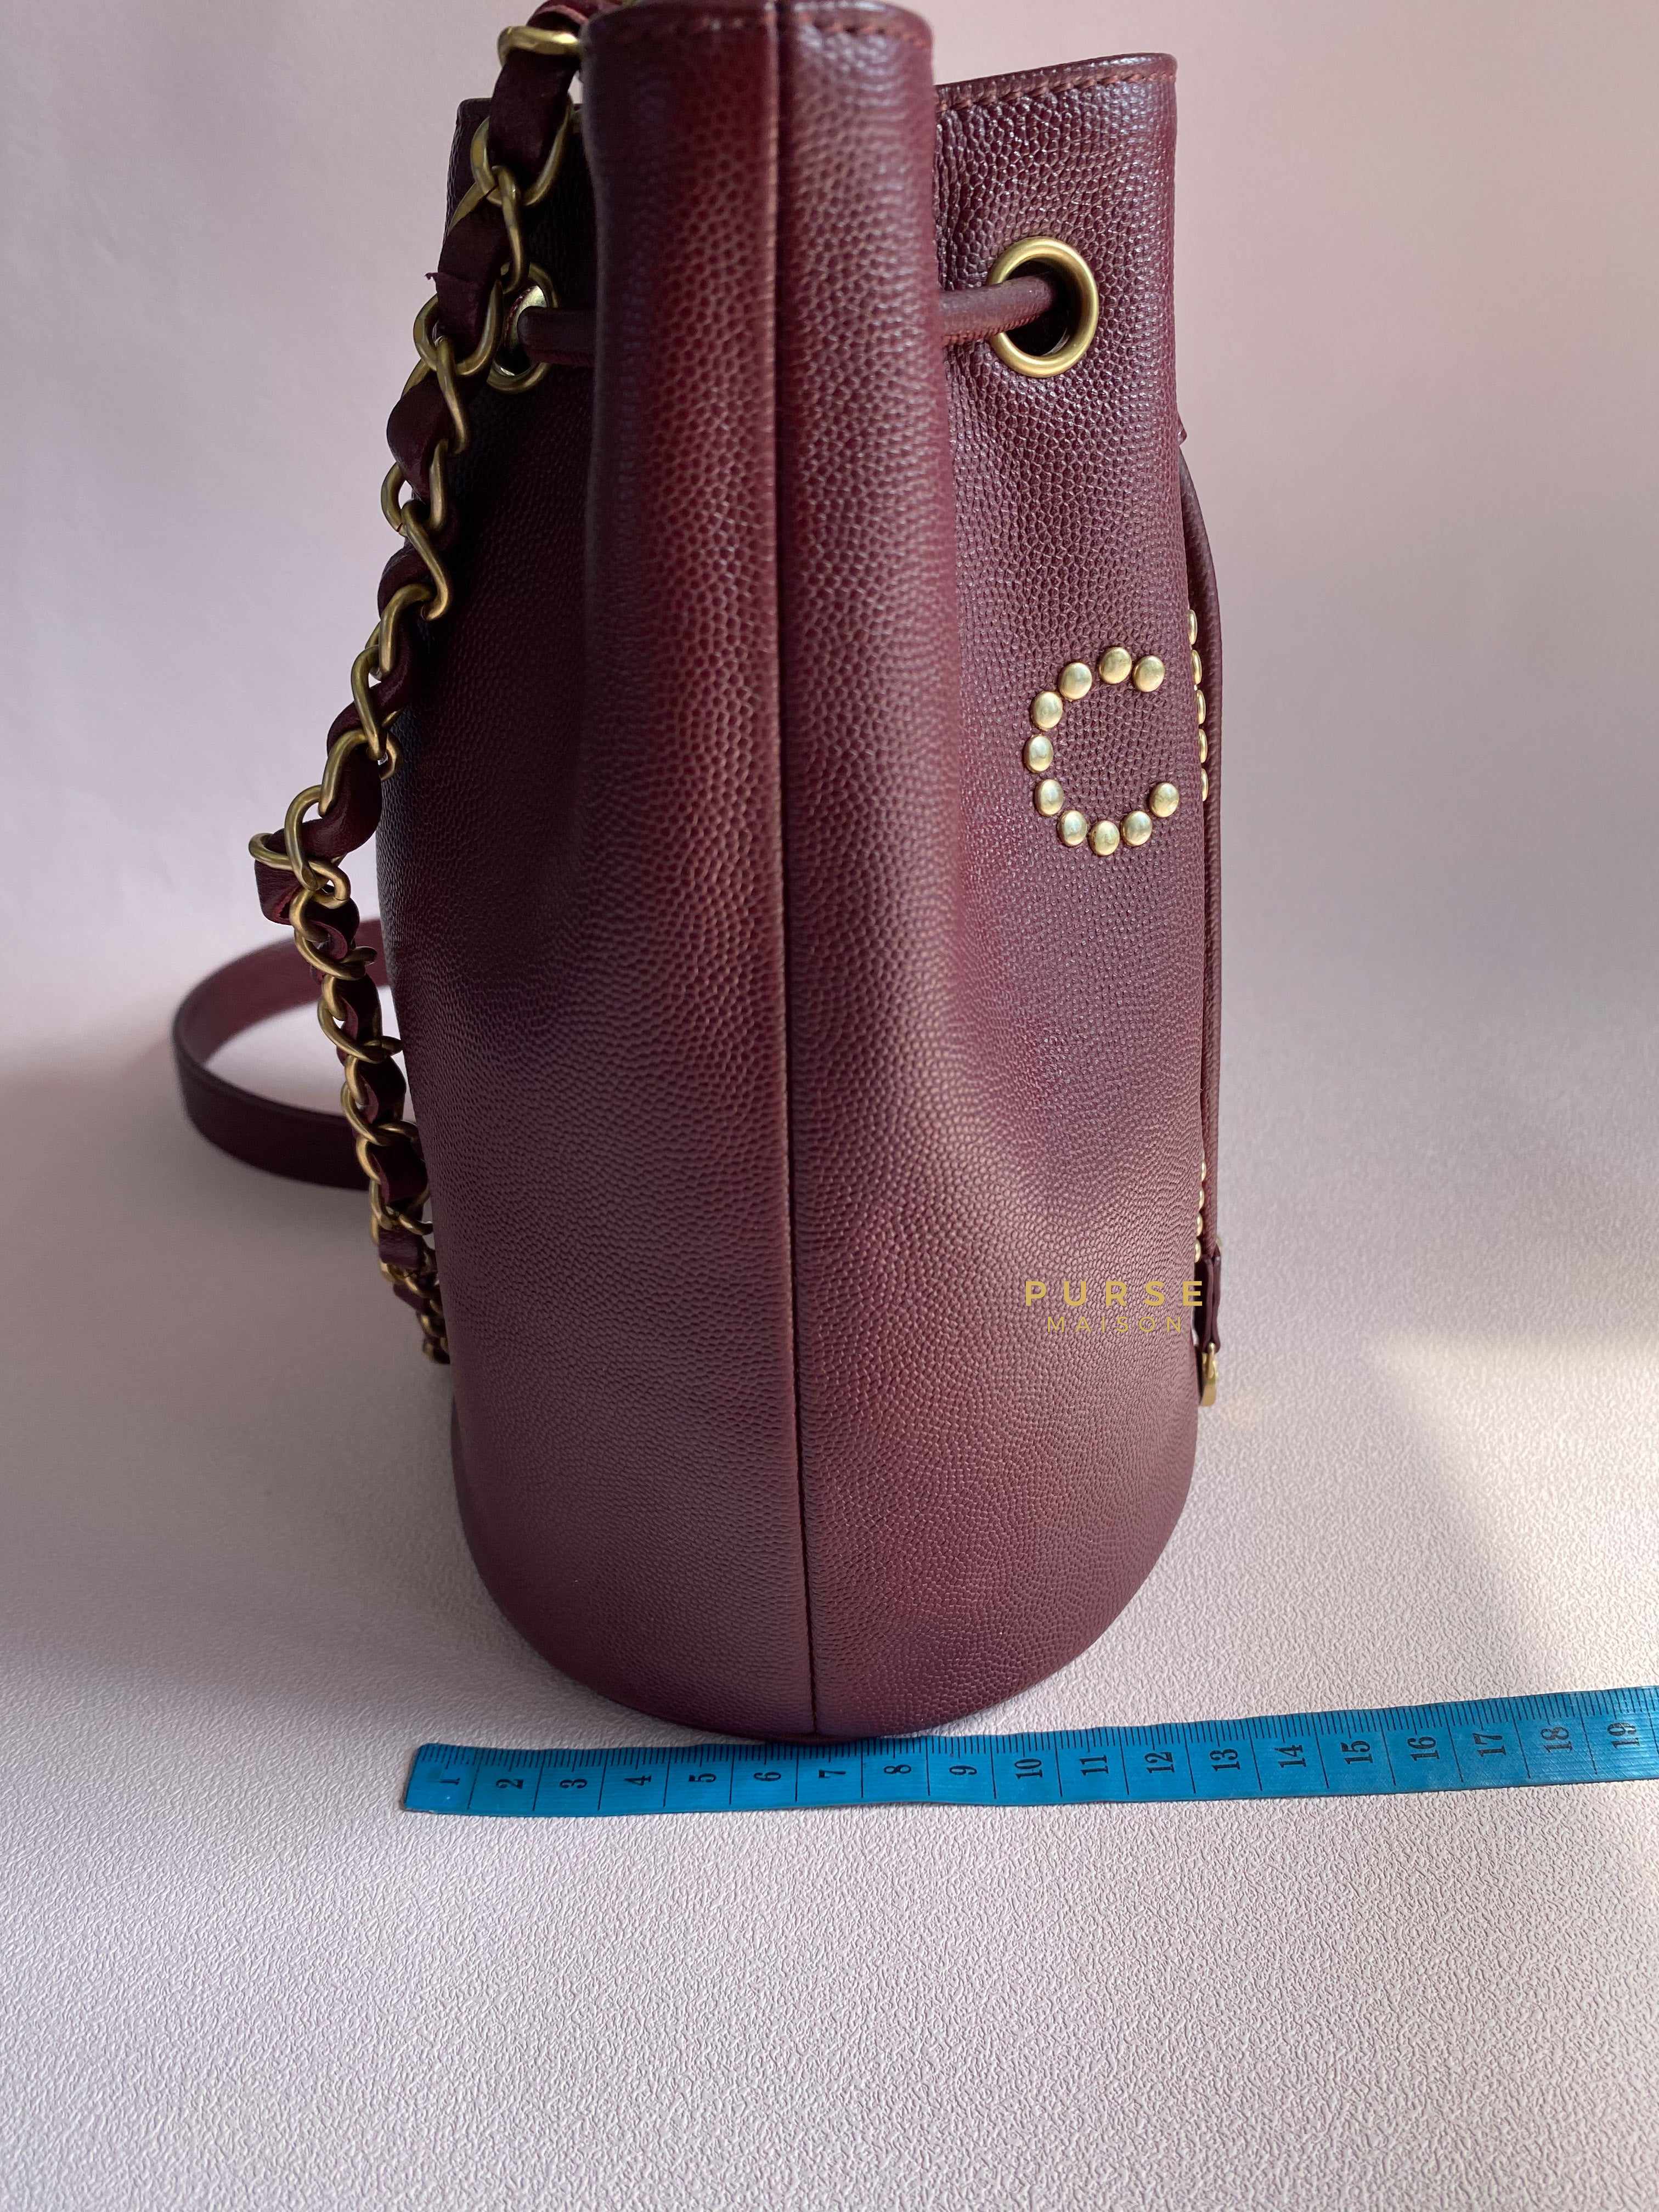 Chanel Deauville Drawstring Bucket Bag Medium Caviar Burgundy in Aged Gold Hardware Series 28 | Purse Maison Luxury Bags Shop